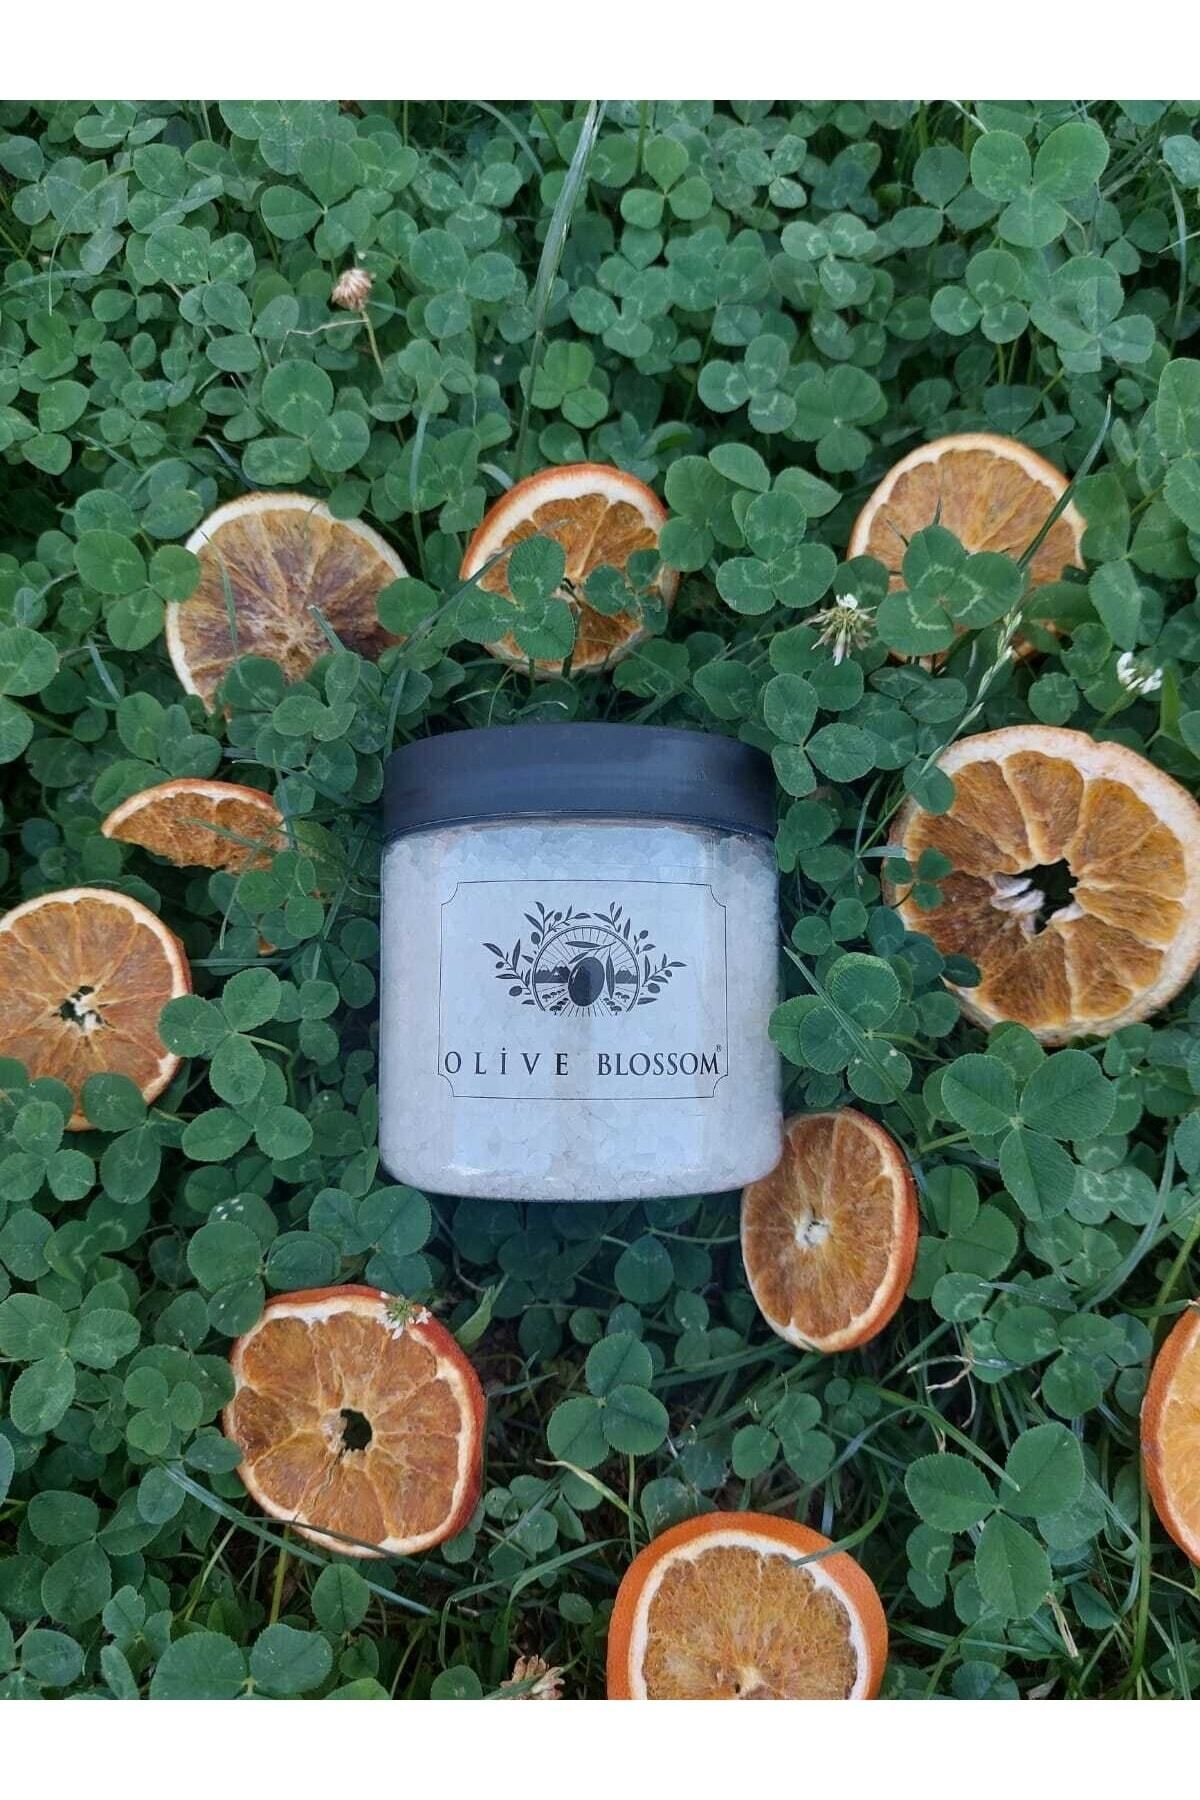 Olive Blossom Portakal Yağı & Himalaya Banyo Tuzu 450 Gr. / Orange Oil & Himalayan Salt